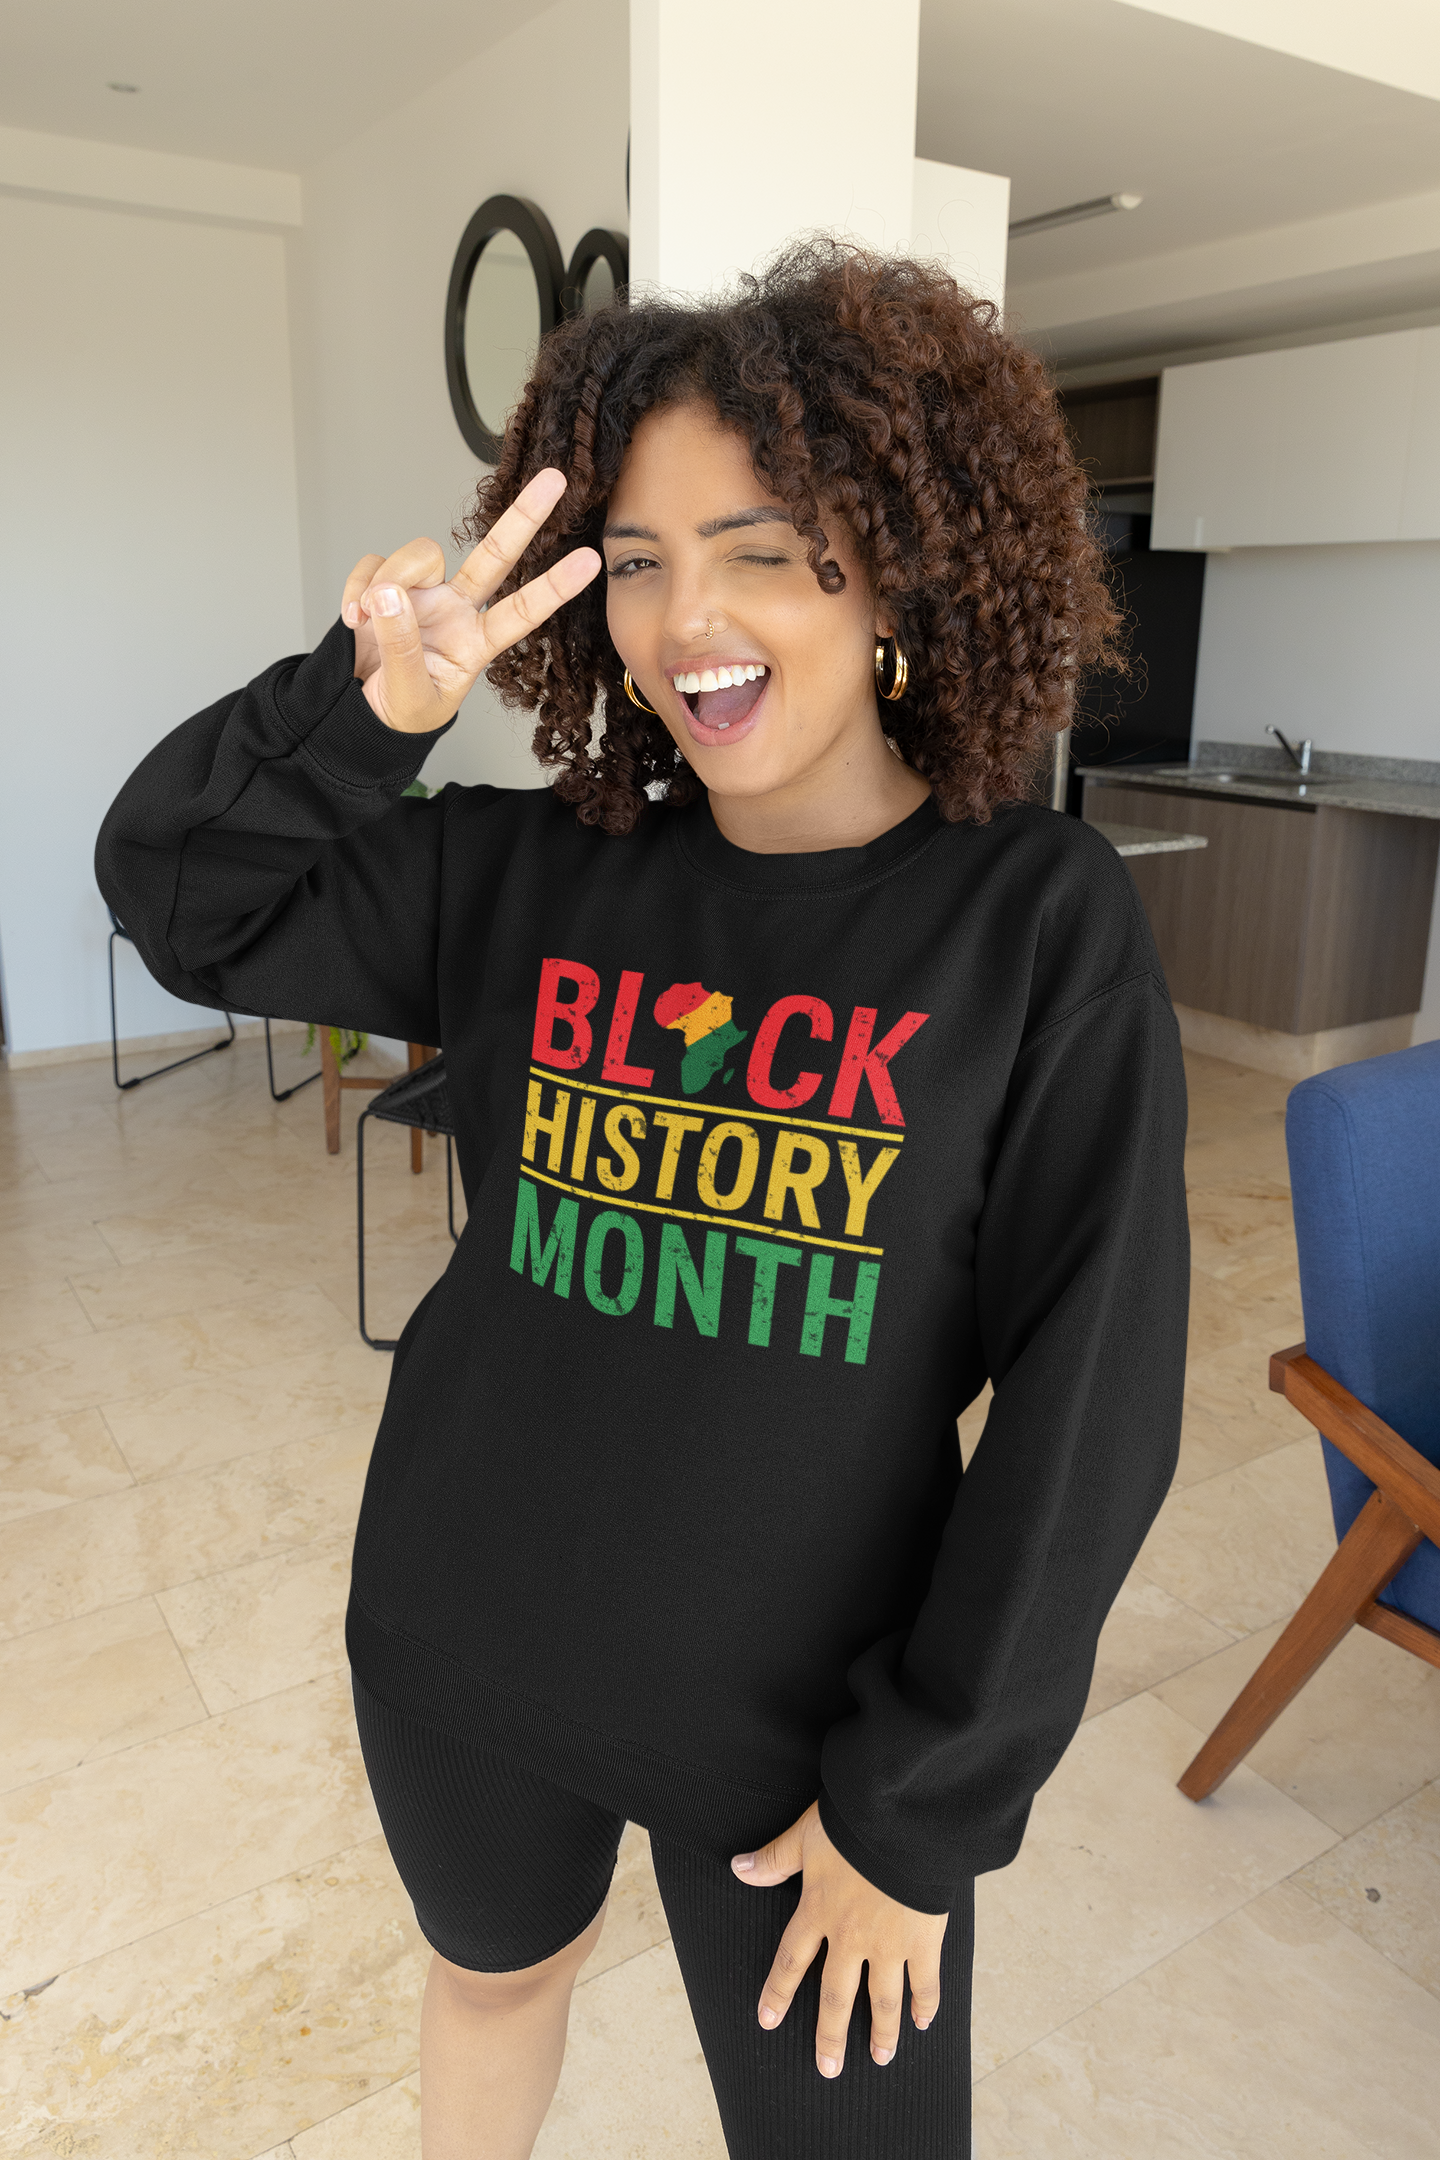 Black History Month Unisex Sweatshirt